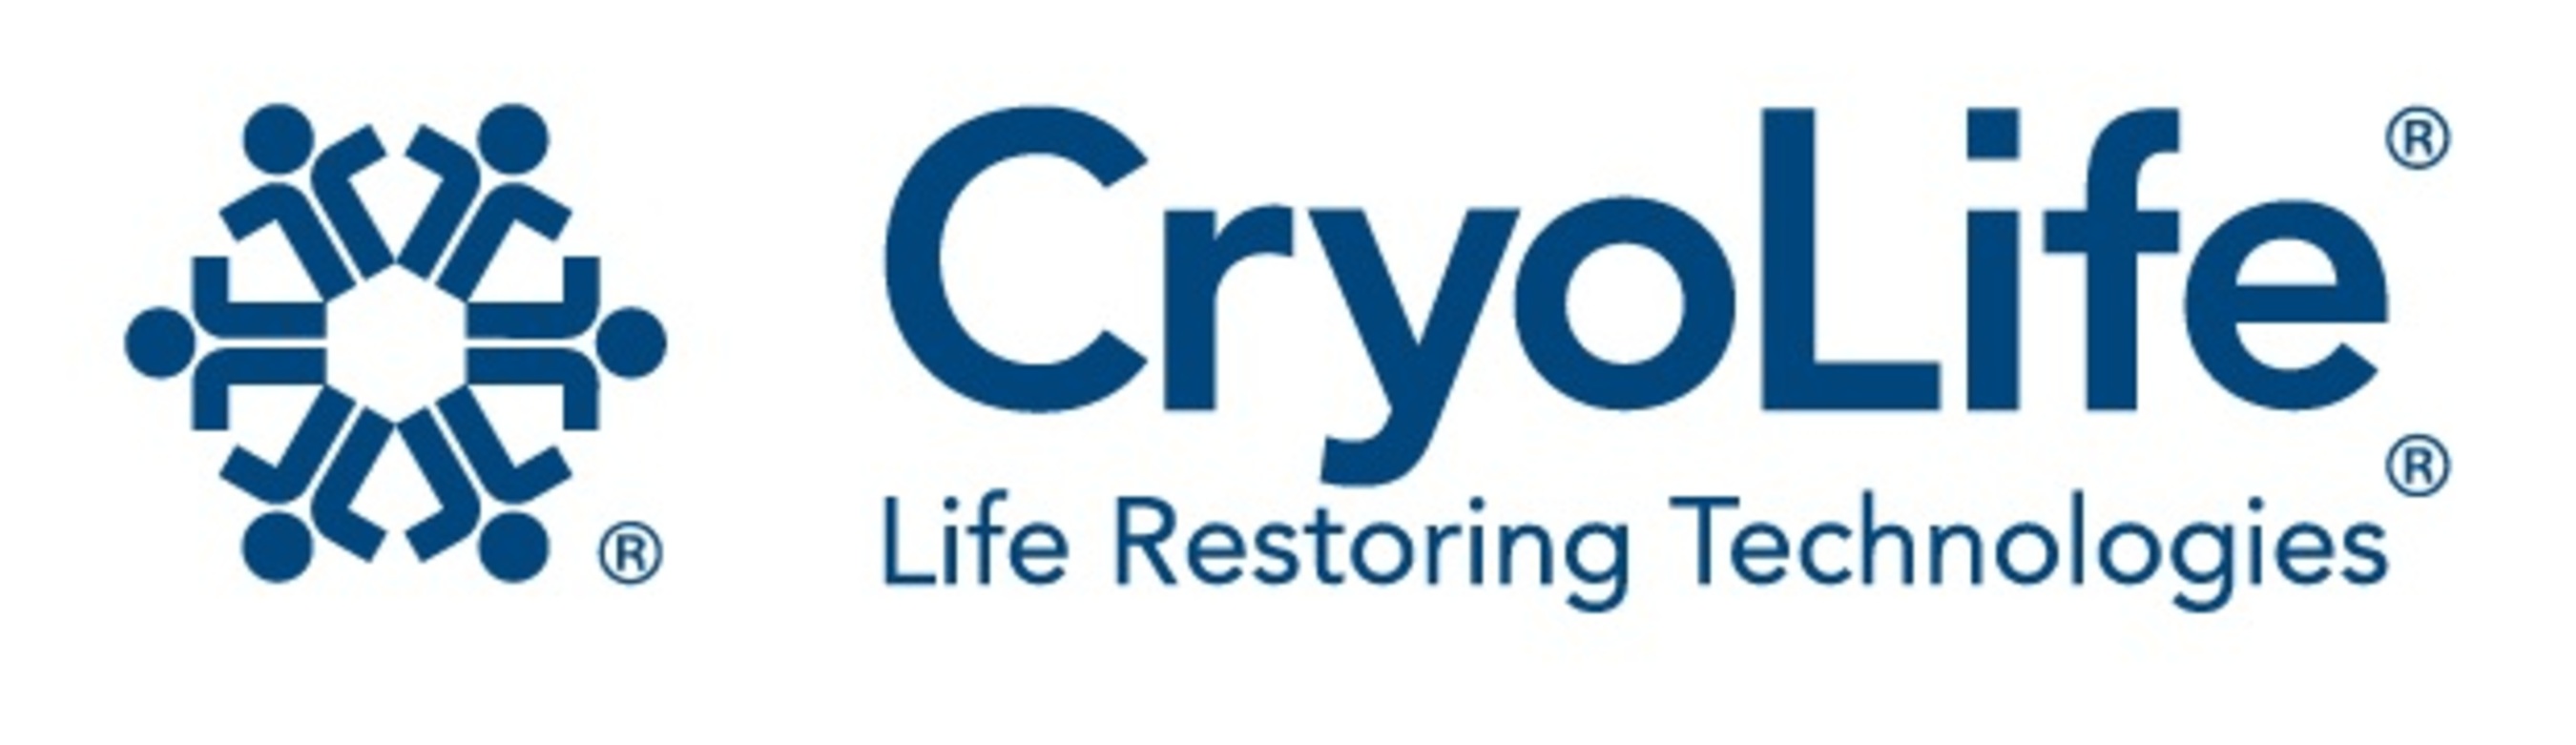 Cryolife logo.